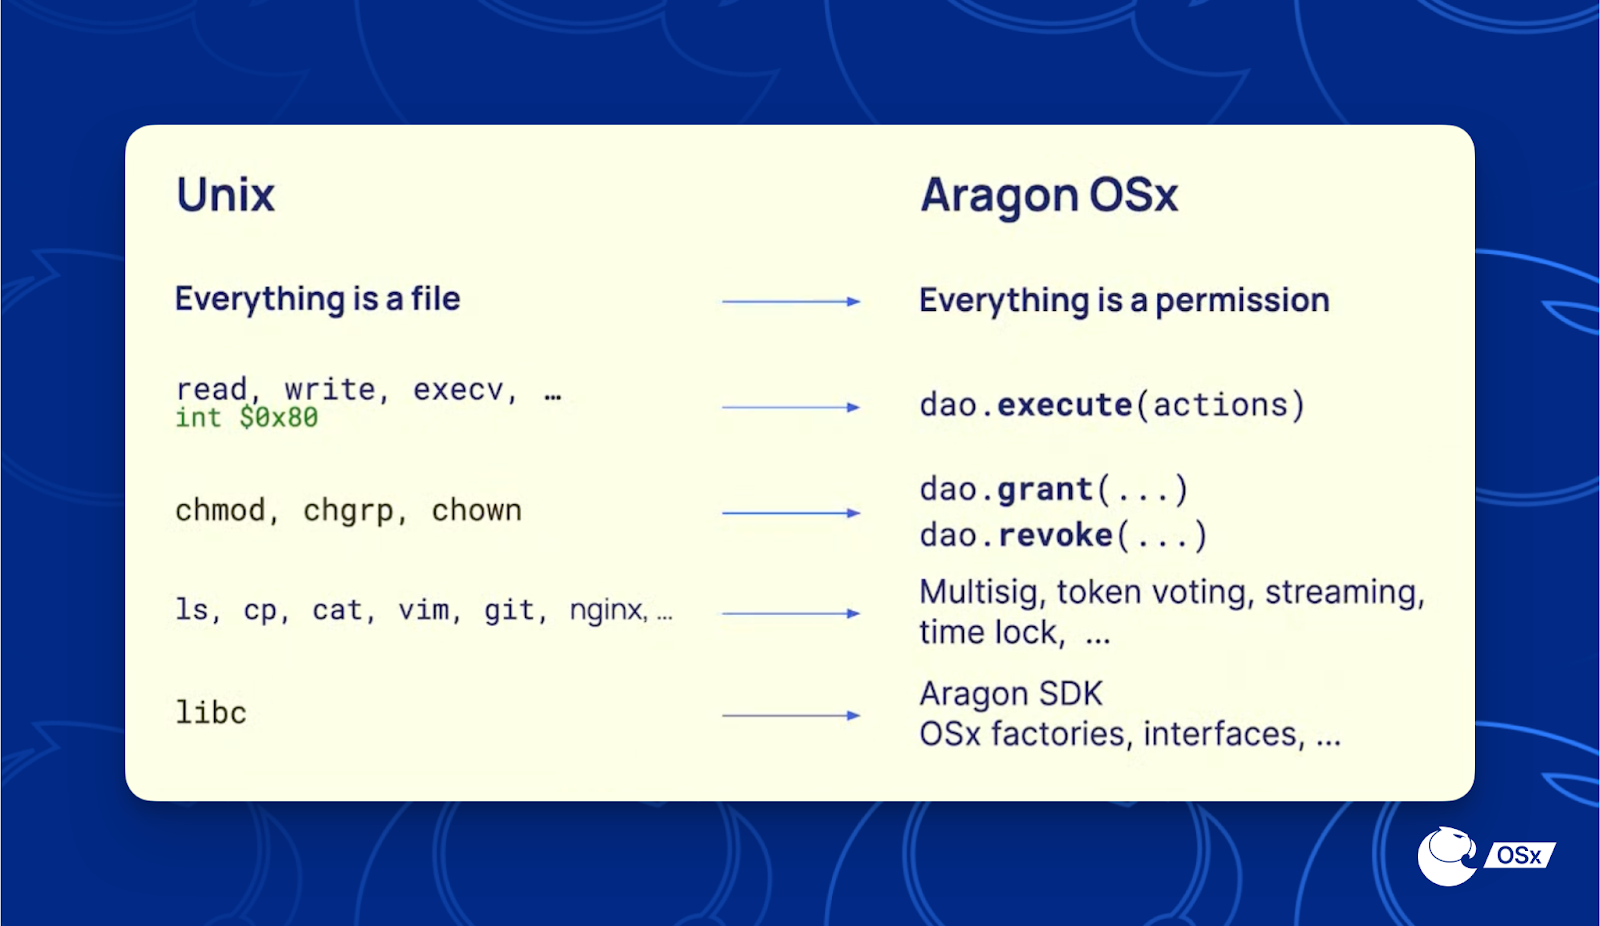 Aragon OSx: The Unix of Ethereum